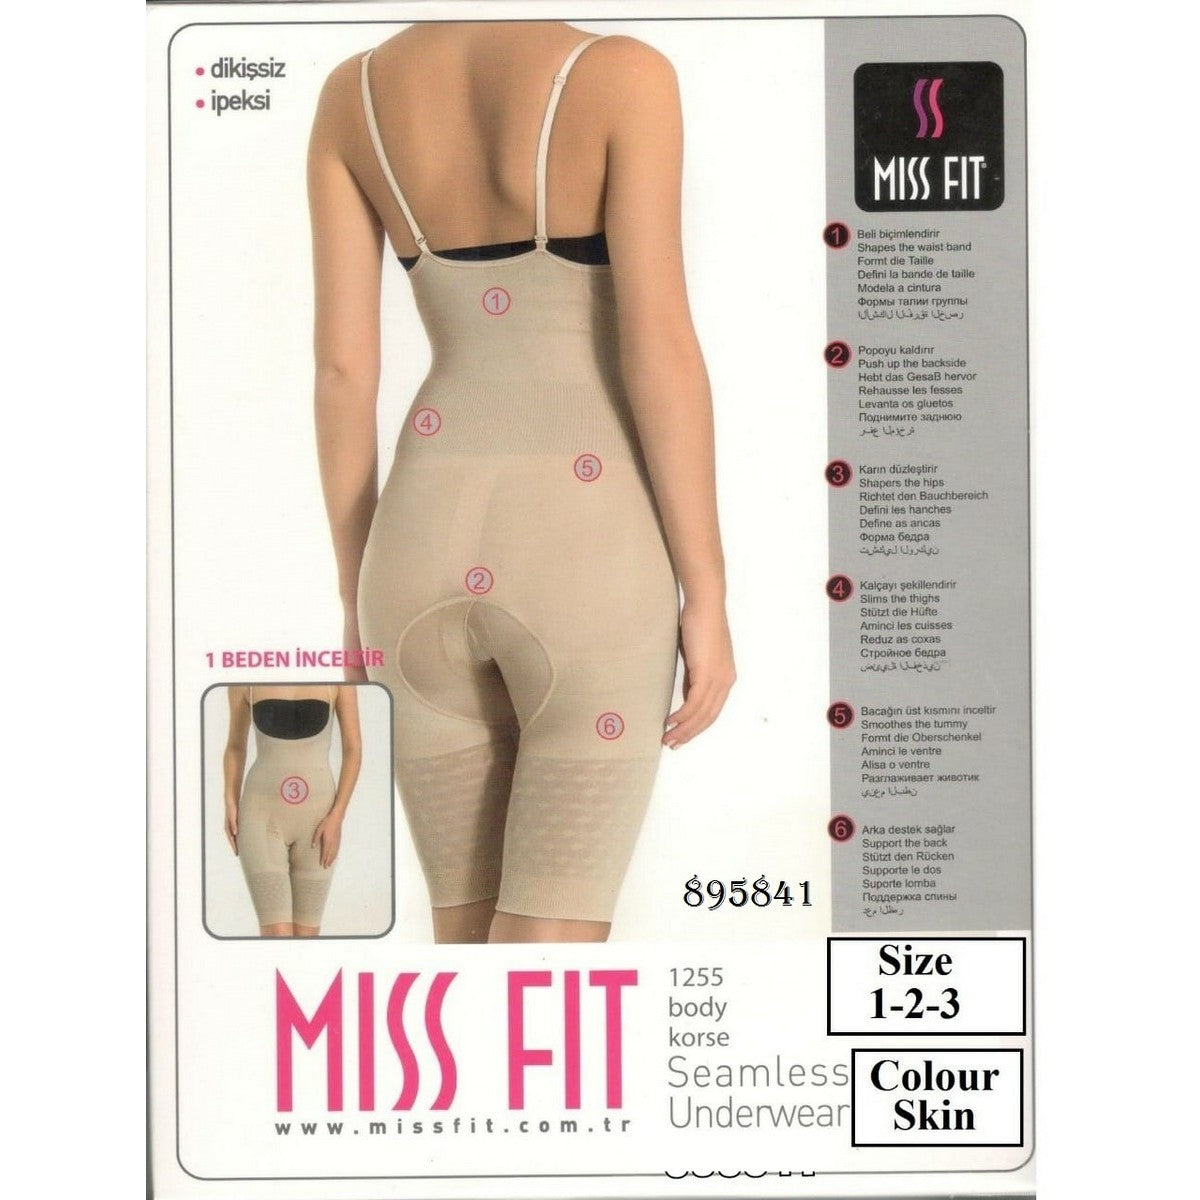 Purchase Miss Fit Slip Girdle, Parlak Mideli Korse Body Shaper Seamless  Underwear, Skin Color, 33641 Online at Best Price in Pakistan 